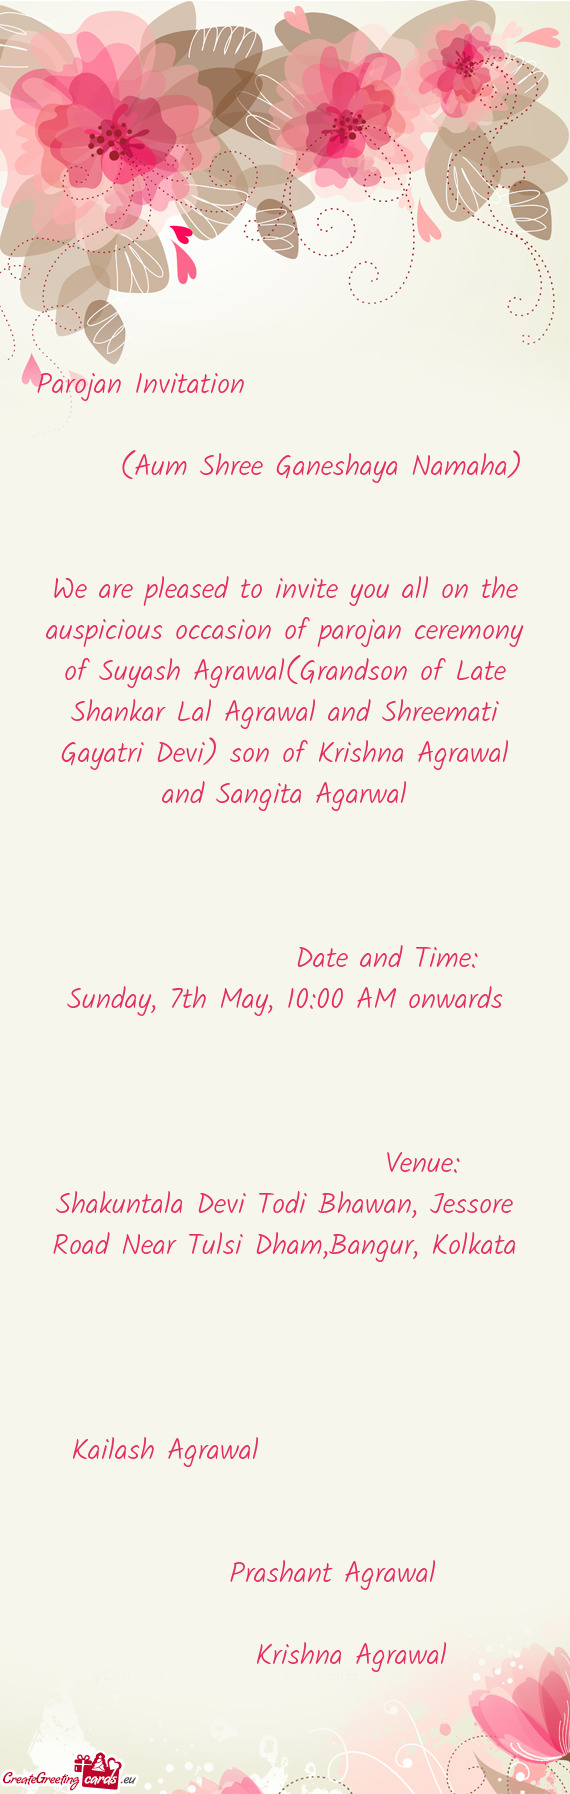 Of parojan ceremony of Suyash Agrawal(Grandson of Late Shankar Lal Agrawal and Shreemati Gayatri Dev